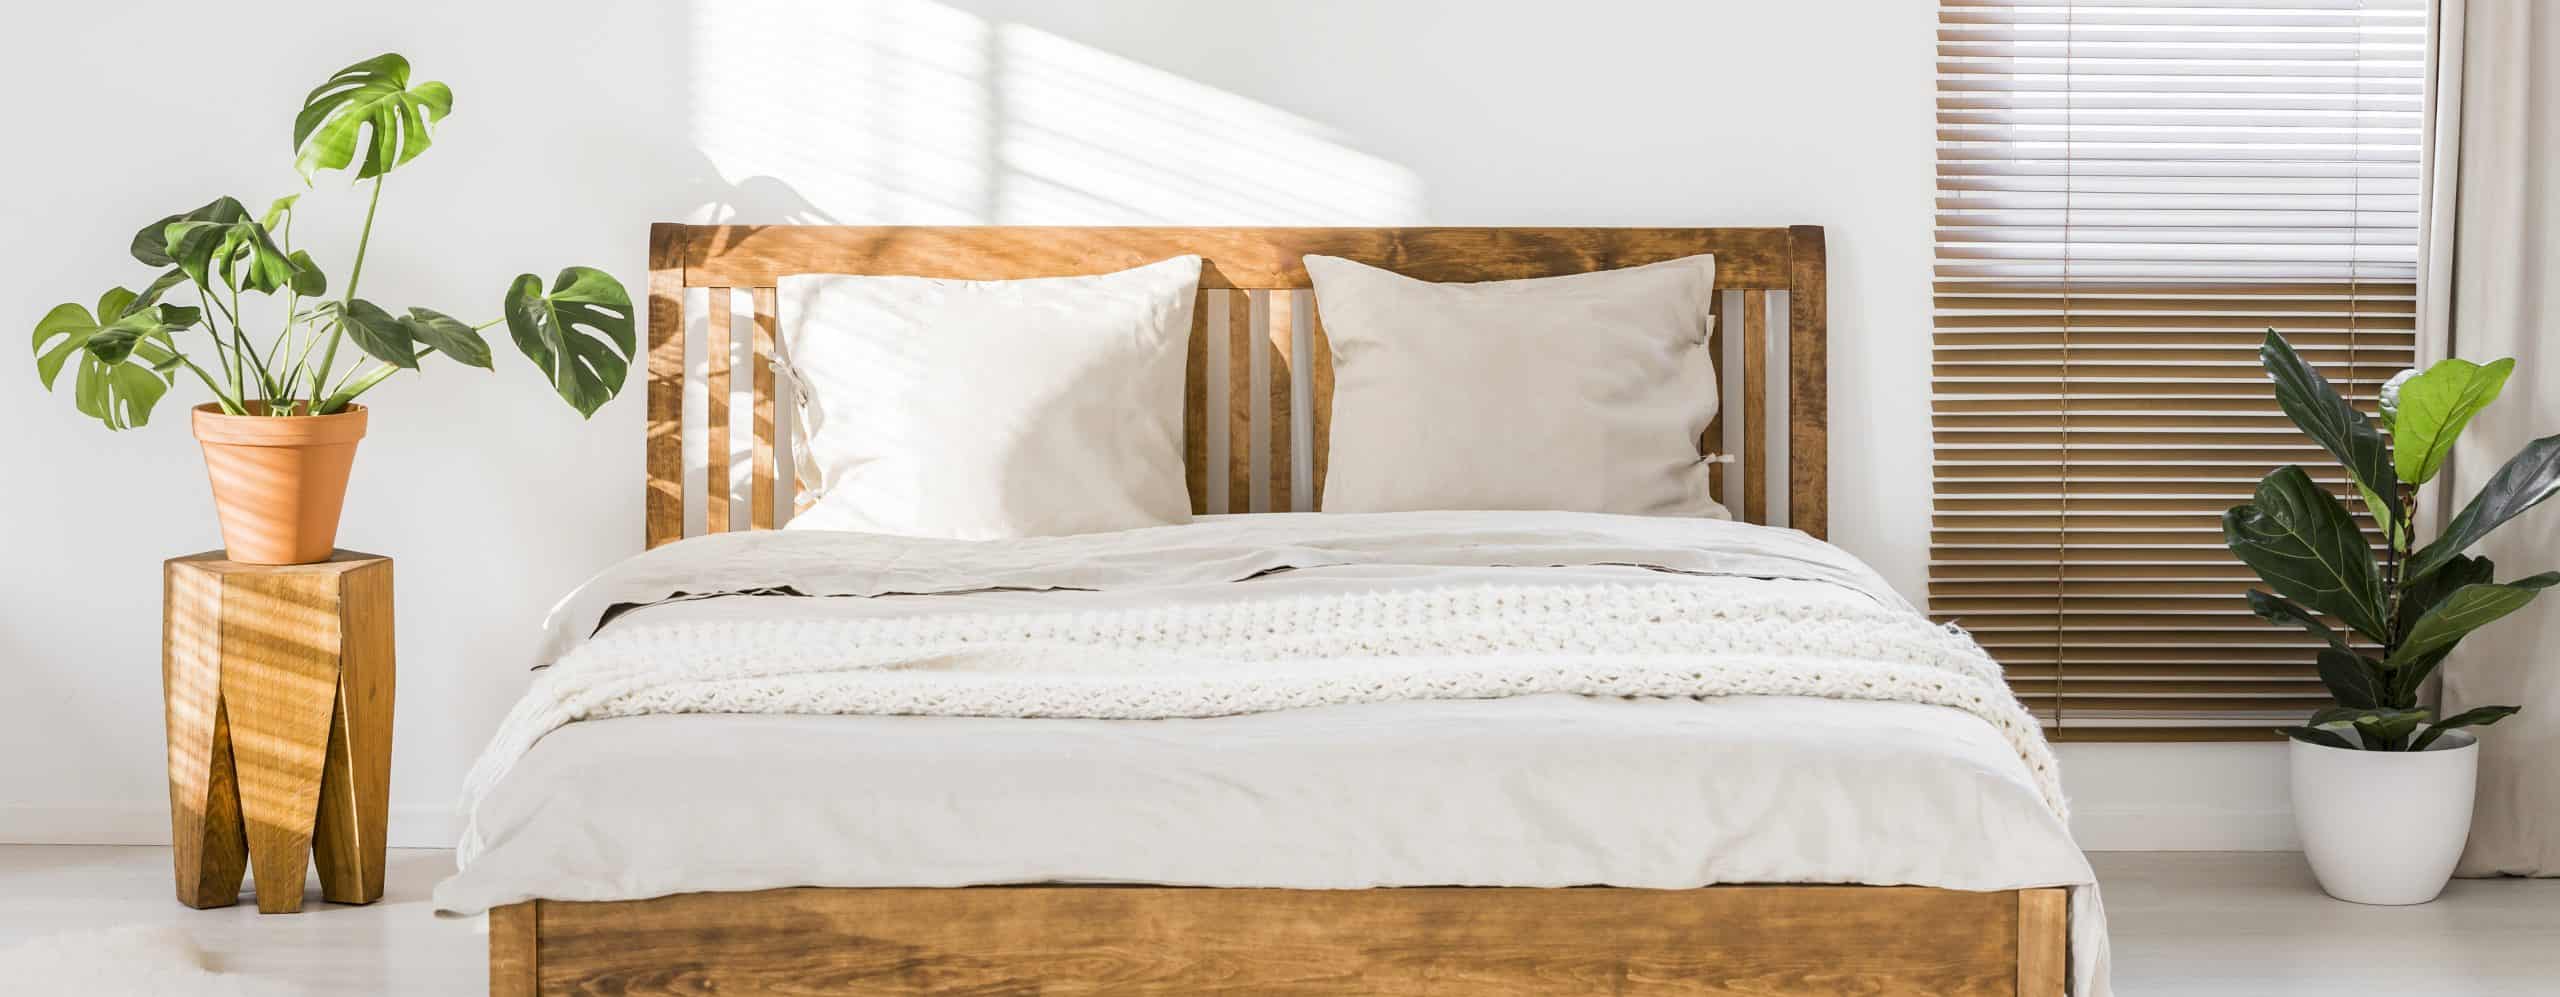 bedbug mattress protectors organic